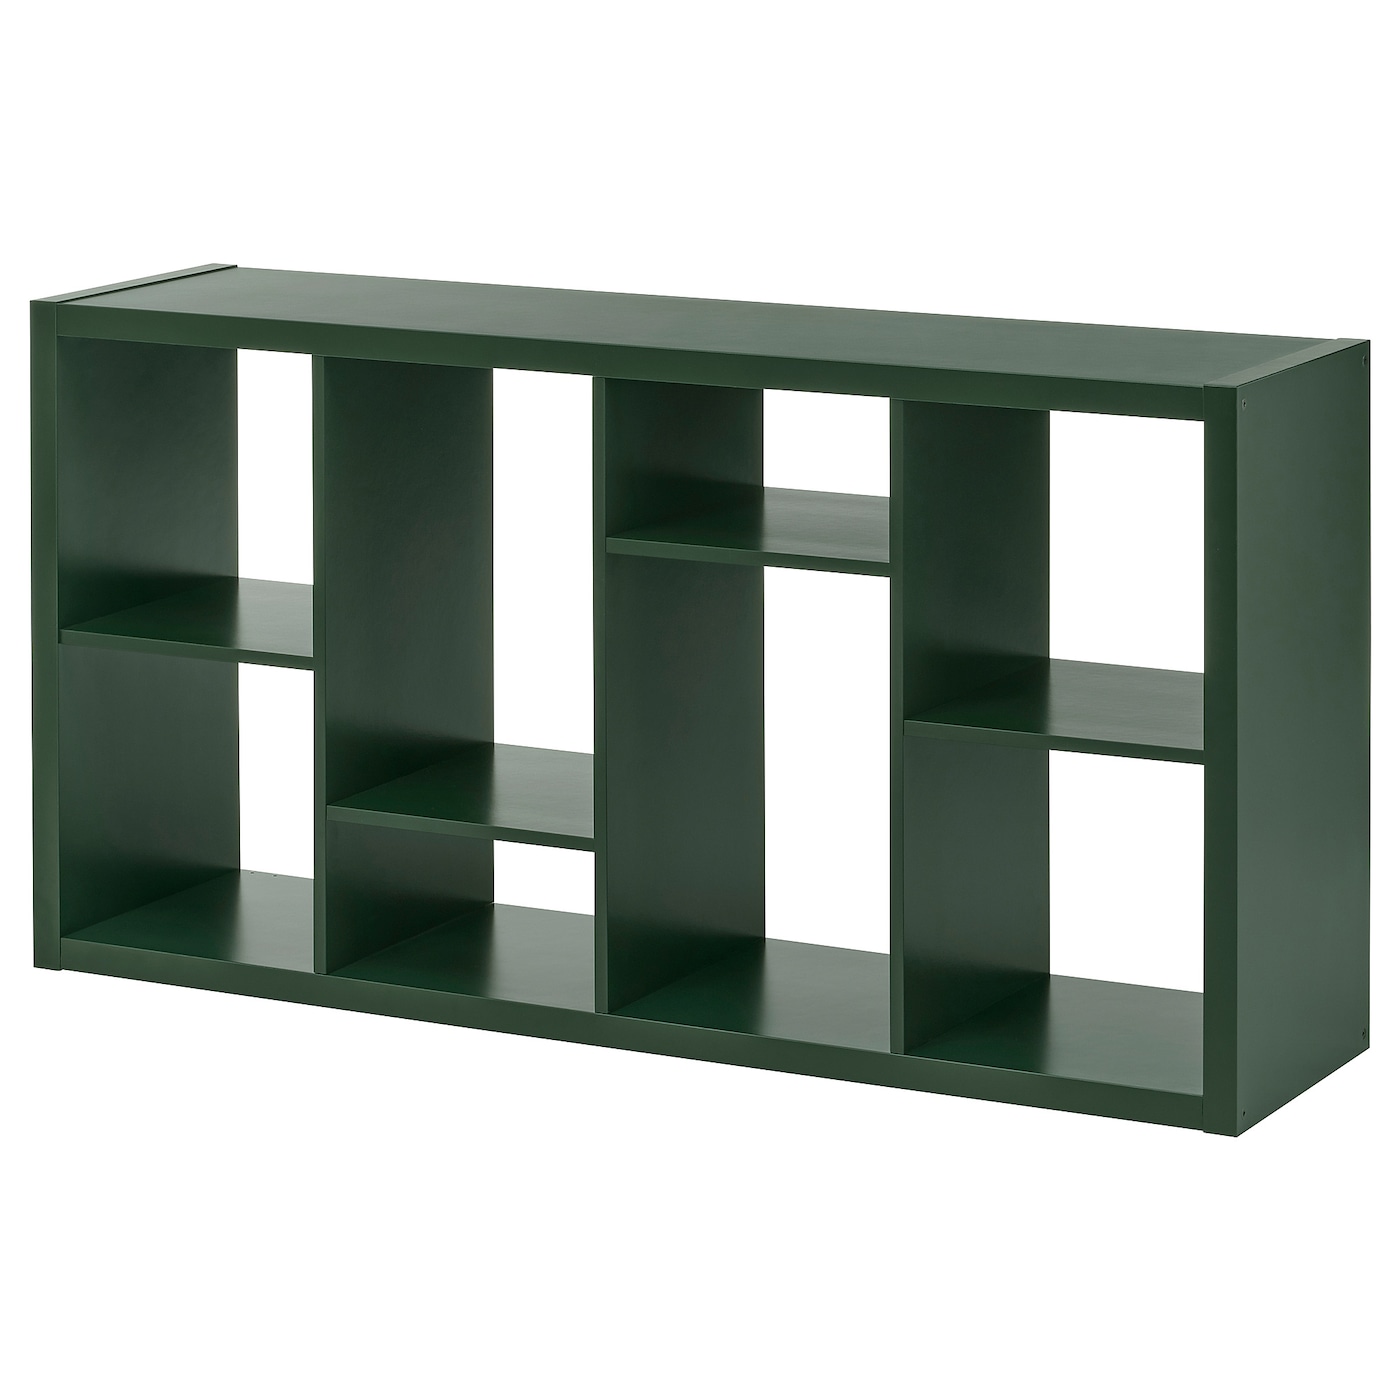 Книжный шкаф - KALLAX IKEA/ КАЛЛАХ ИКЕА,  147х77 см,  зеленый